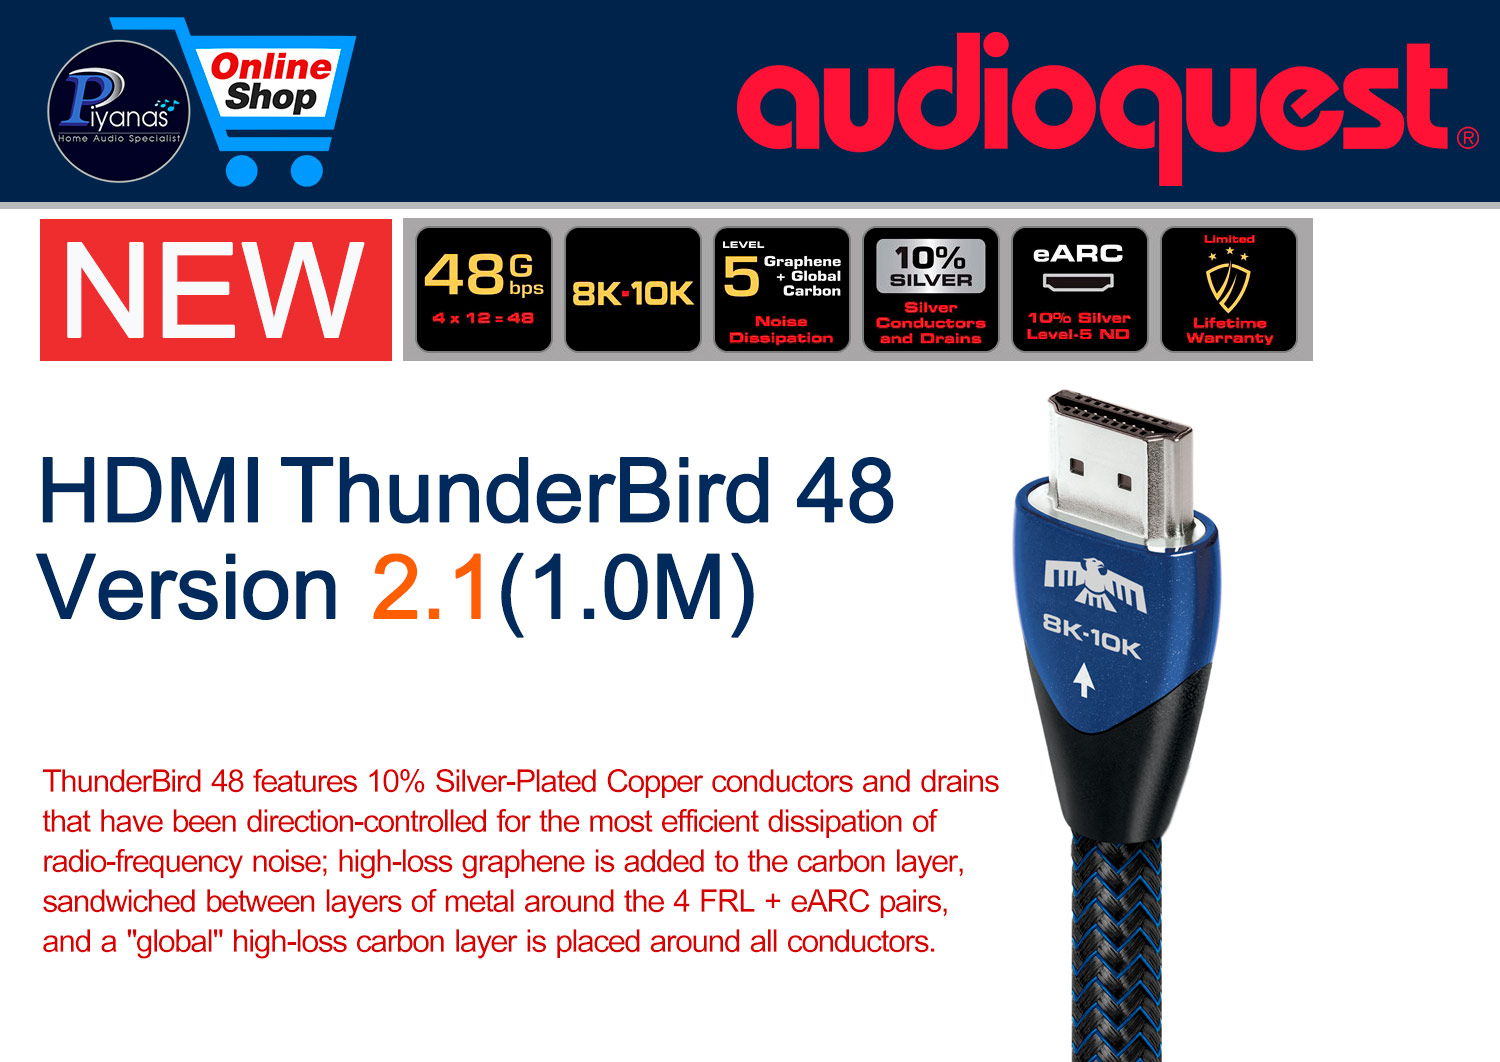 HDMI-ThunderBird 48 Version 2.1 (1.0M)